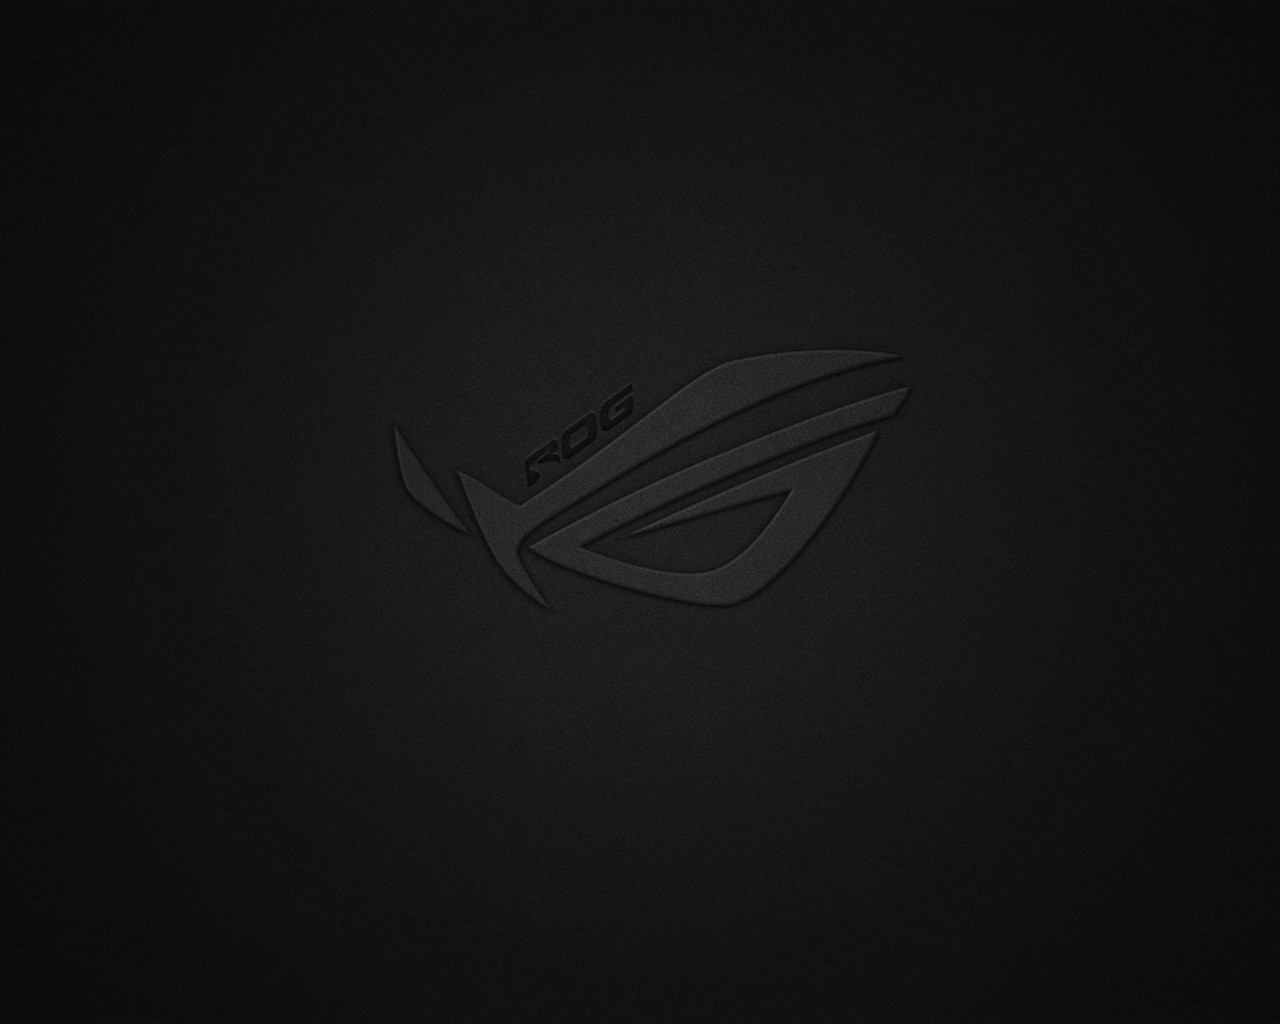 Выпуклый логотип Nvidia на сером фоне 1280x1024